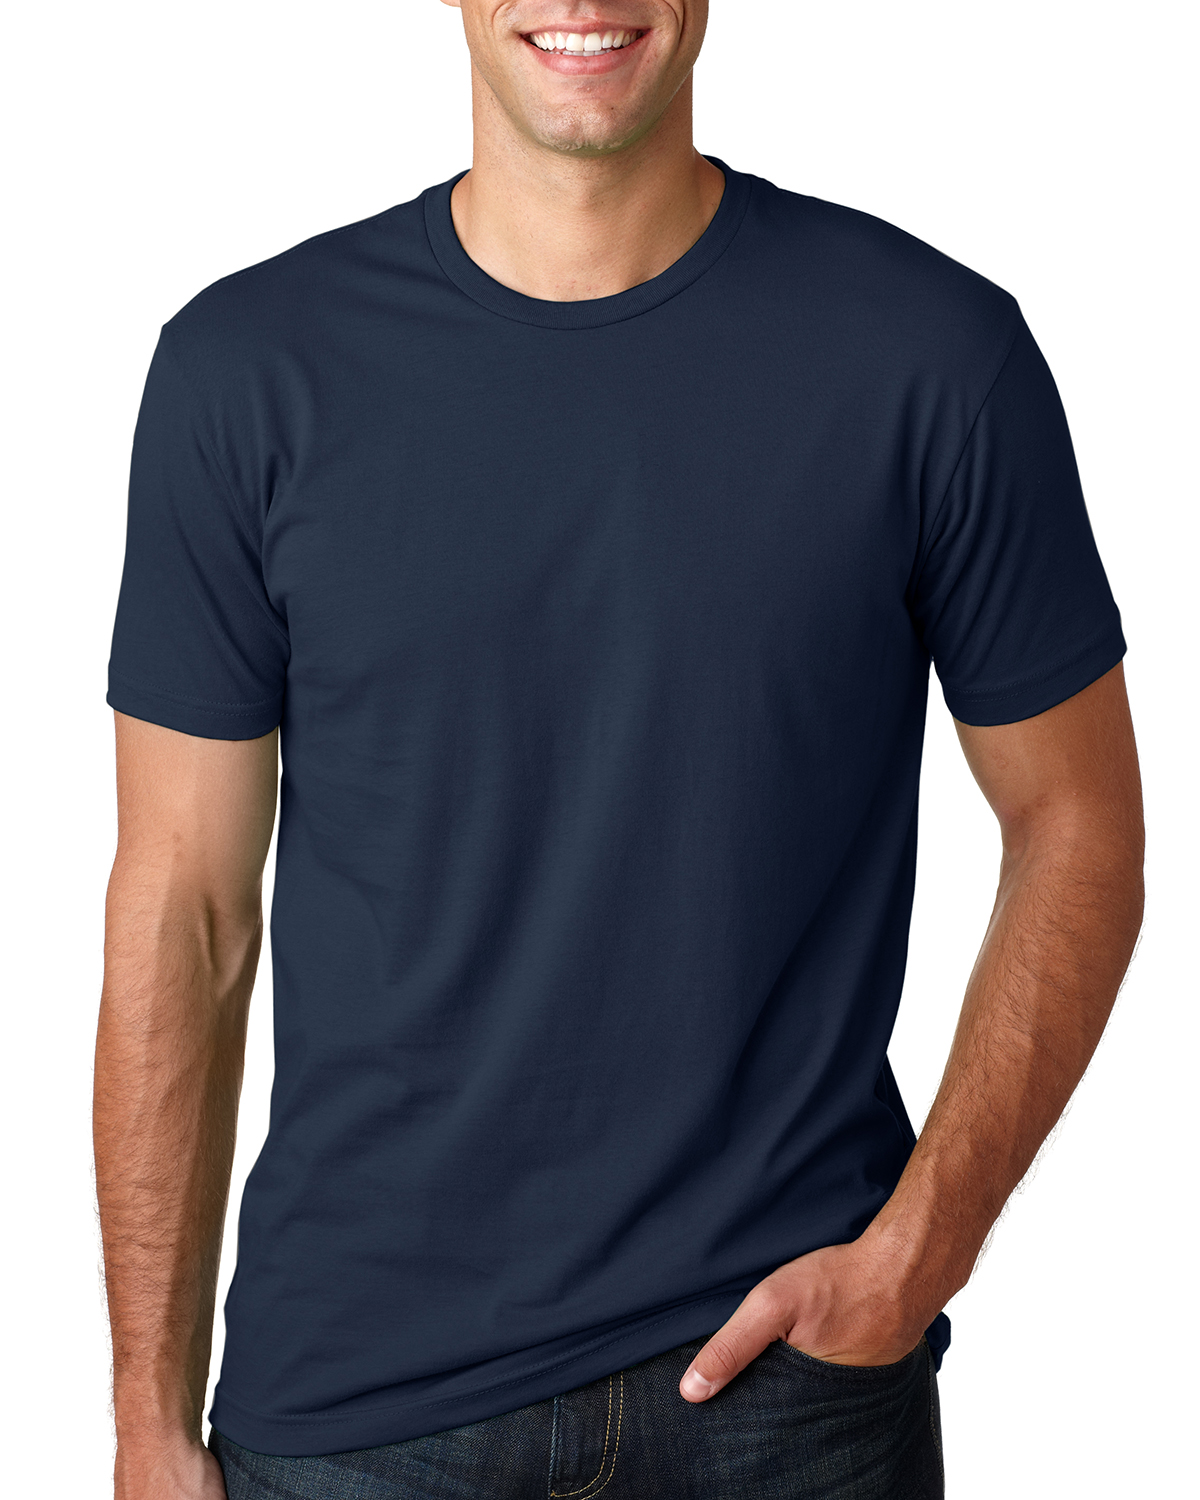 NEW Next Level 100% Cotton Men's Premium Fitted Crew Neck XS-XL T-Shirt  R-3600